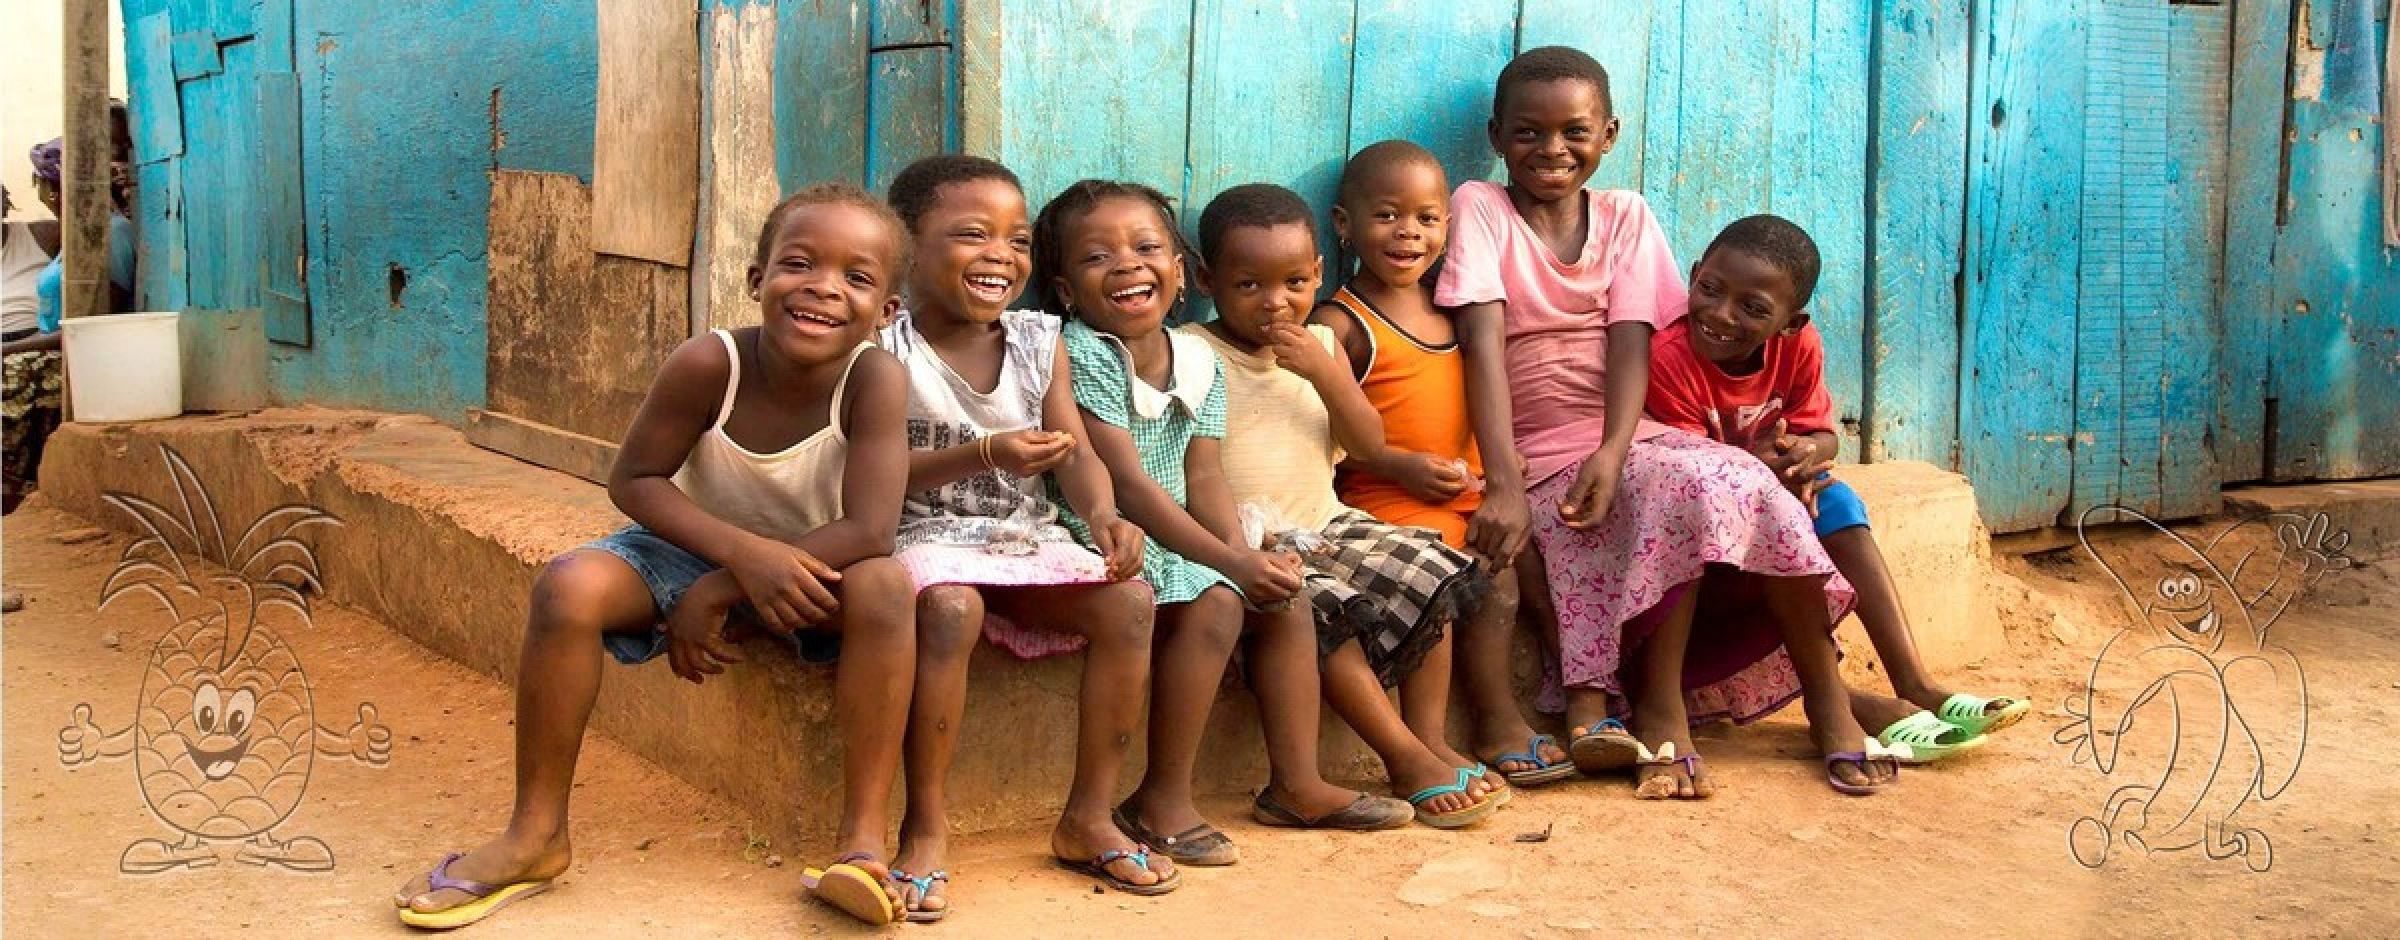 Enfants du Ghana